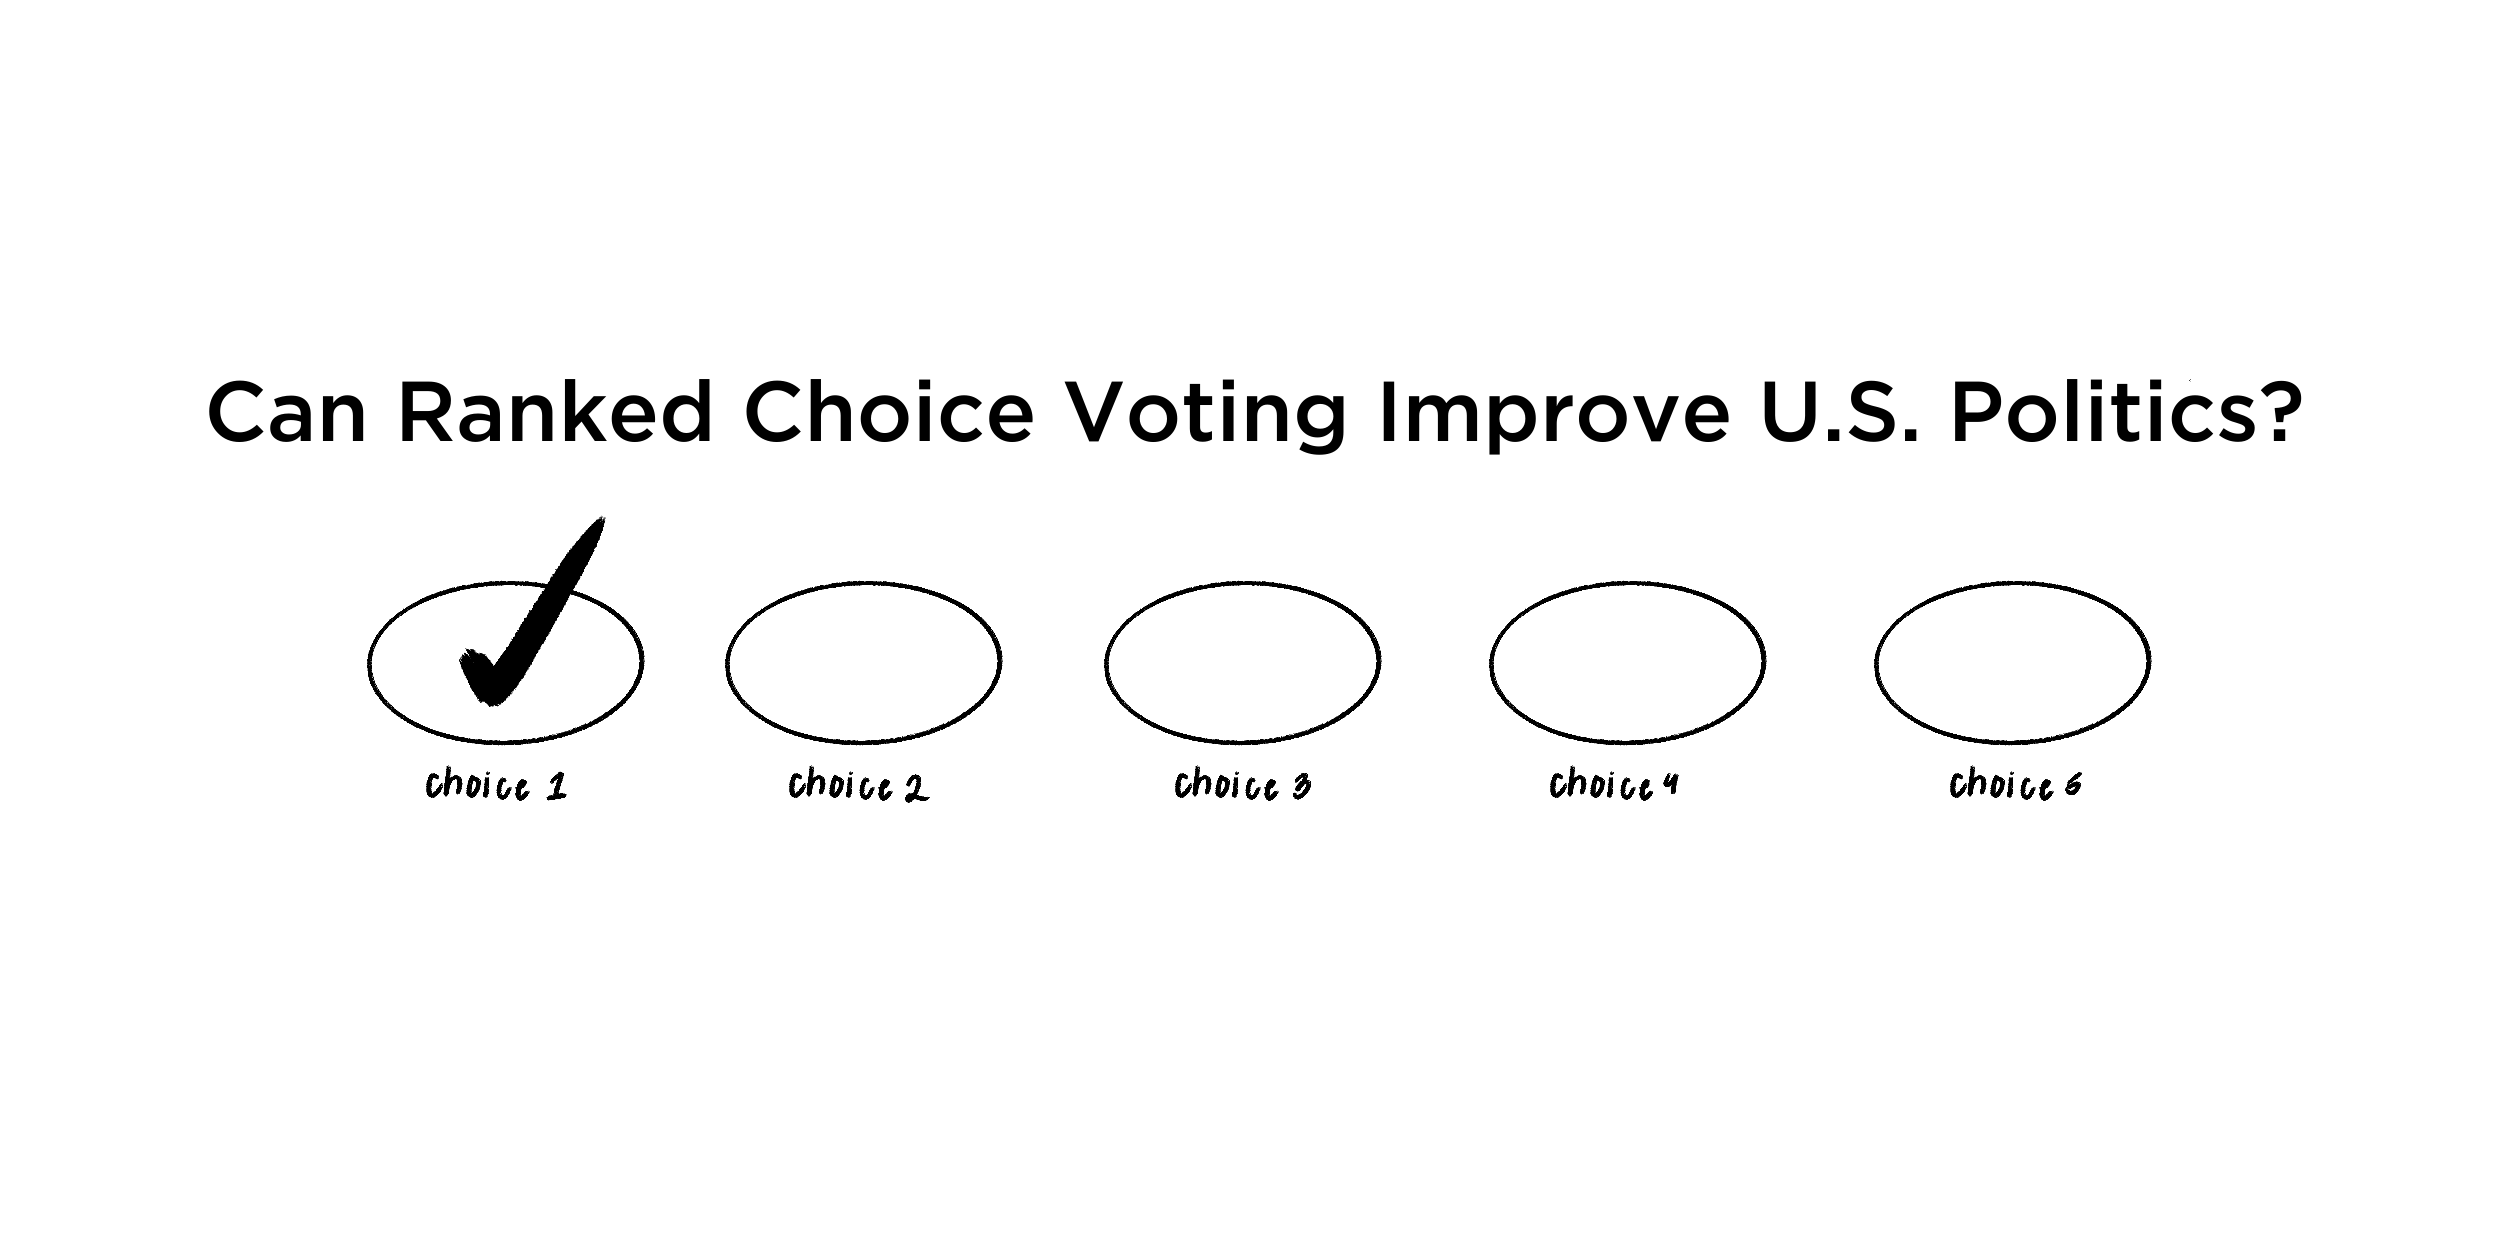 Can Ranked Choice Voting Improve U.S. Politics?